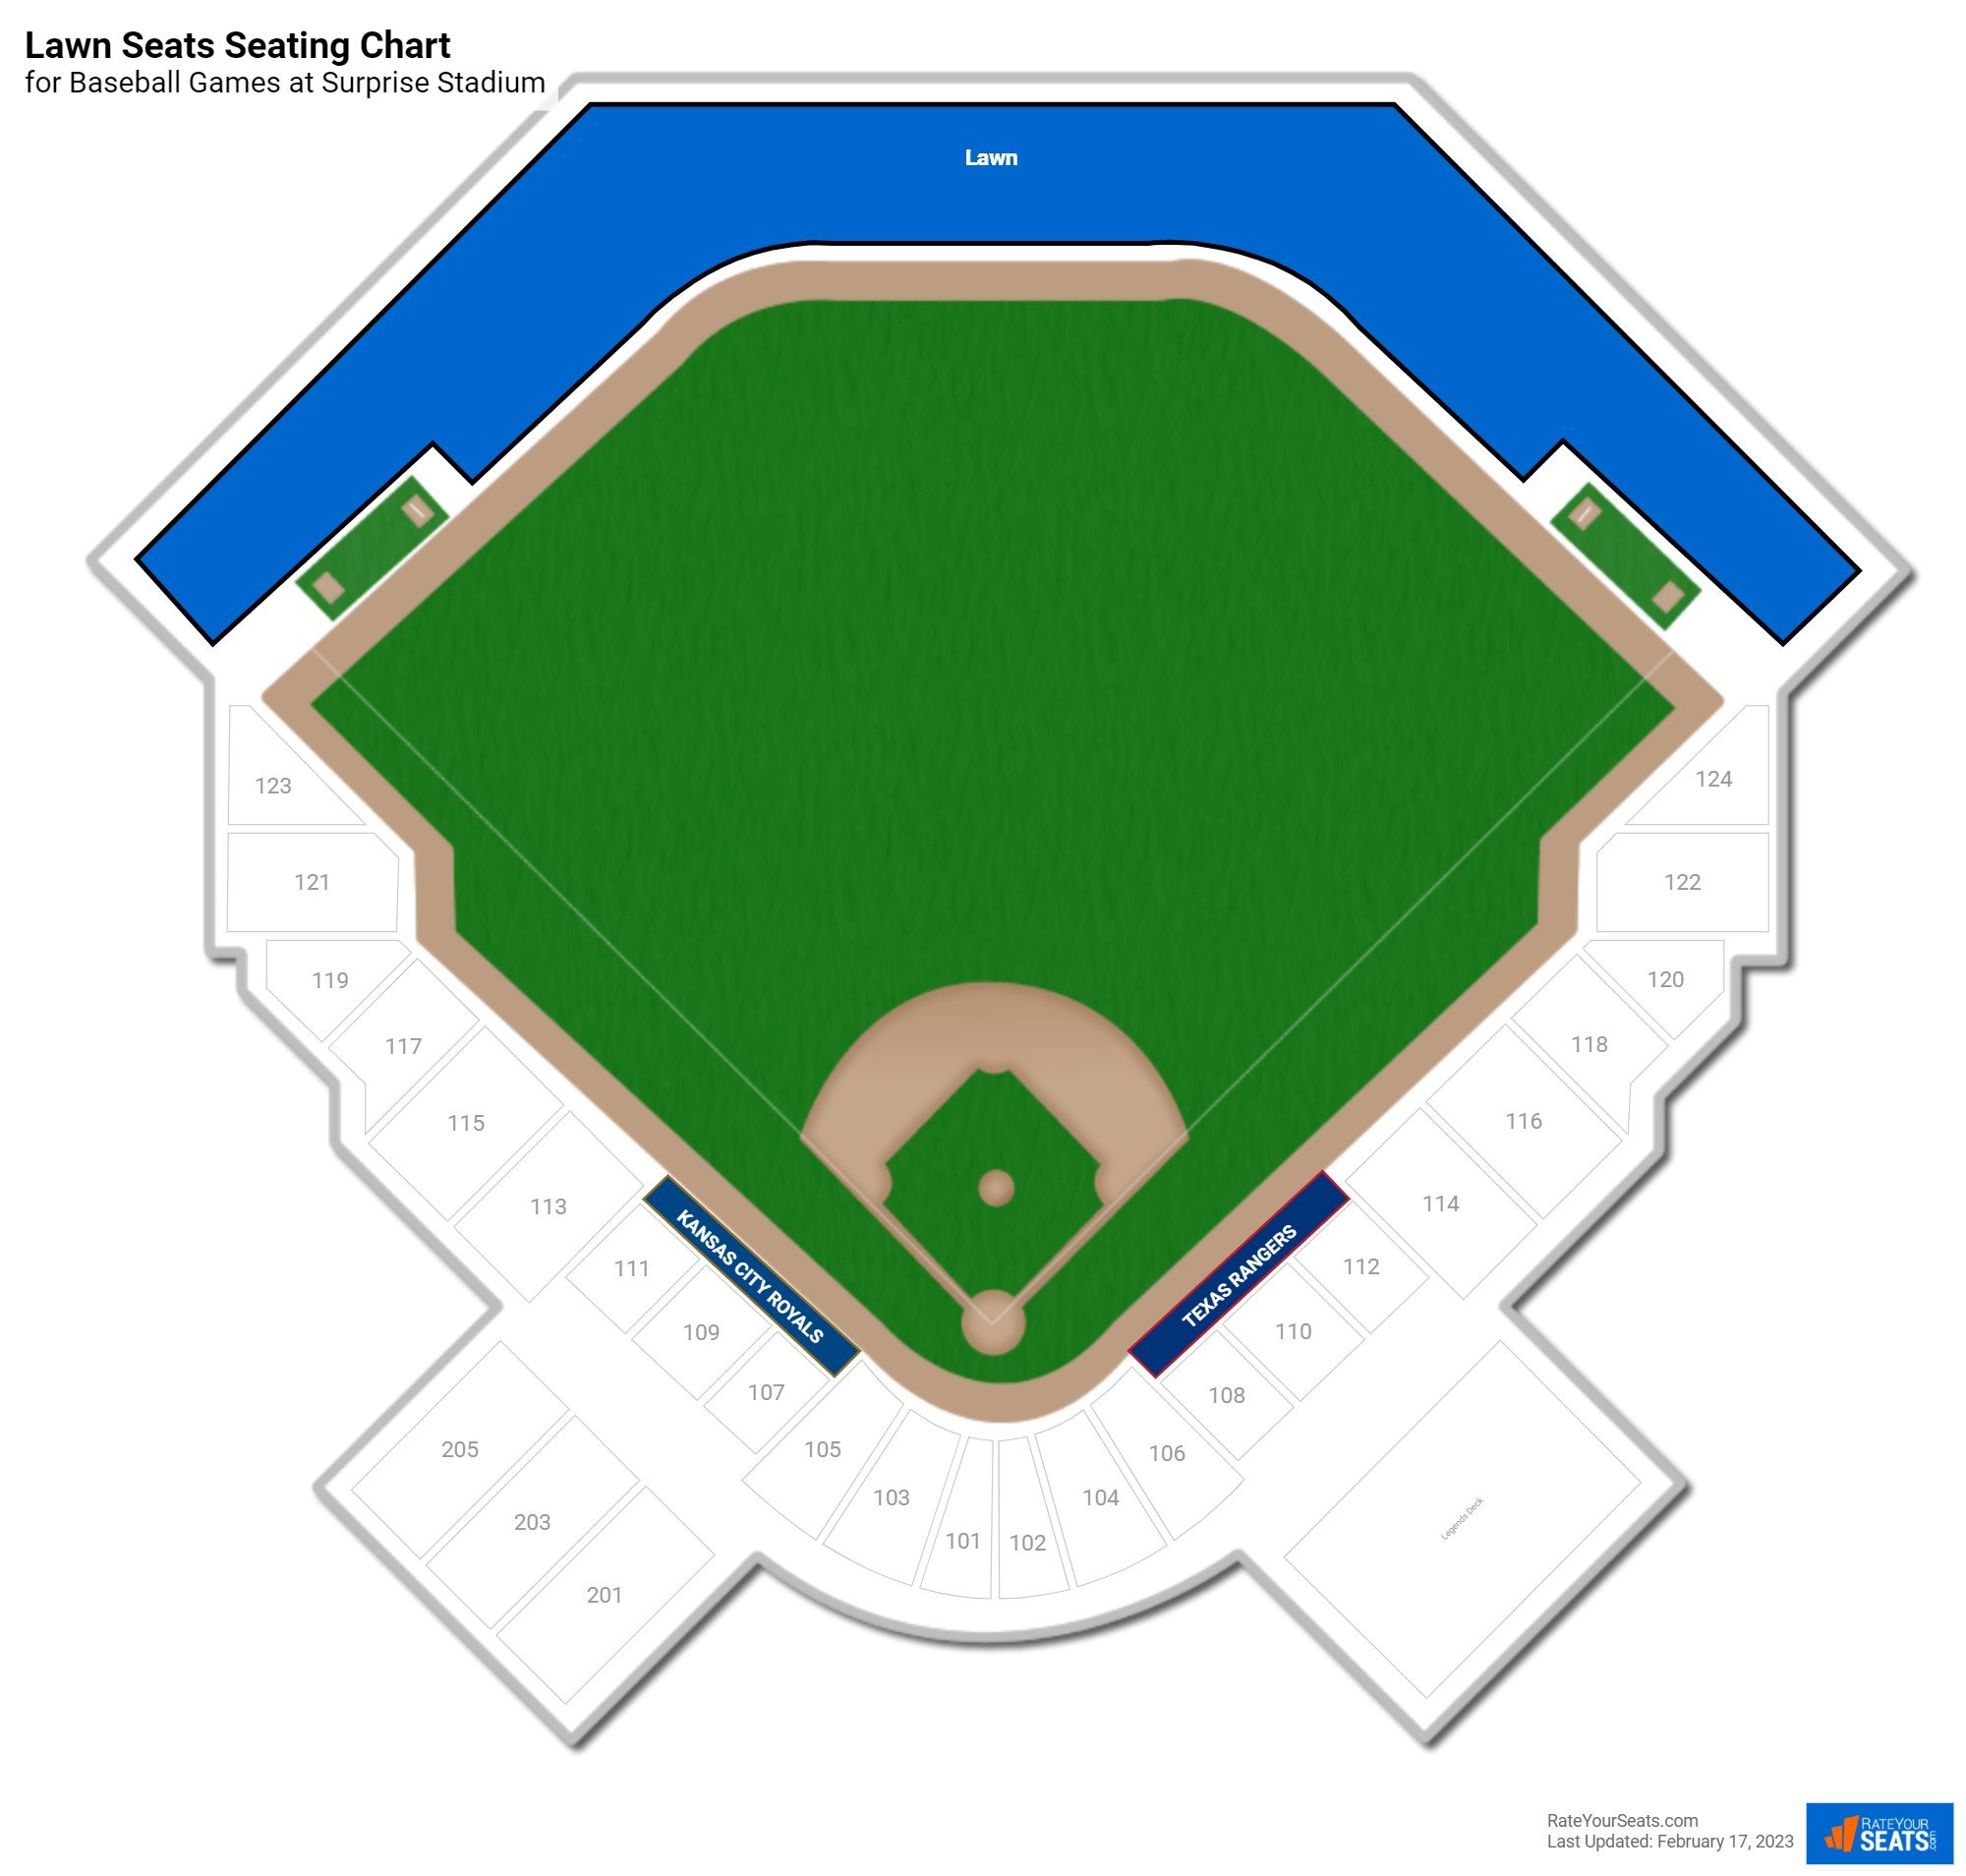 Baseball Lawn Seats Seating Chart at Surprise Stadium